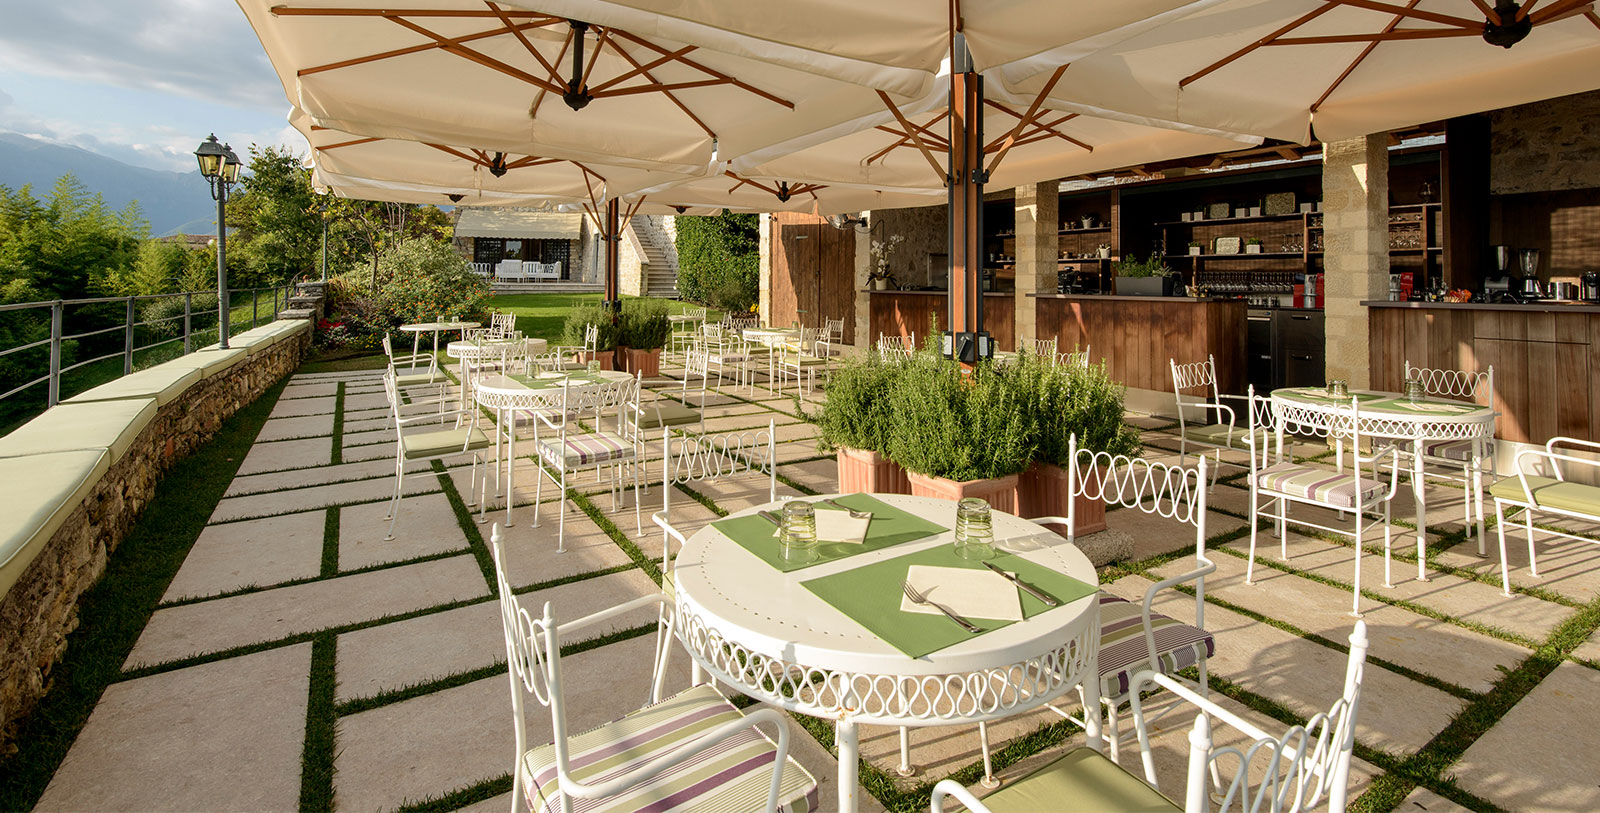 Image of Villa Cipriani Restaurant Hotel Villa Cipriani, 1889, Member of Historic Hotels Worldwide, in Asolo, Italy, Taste